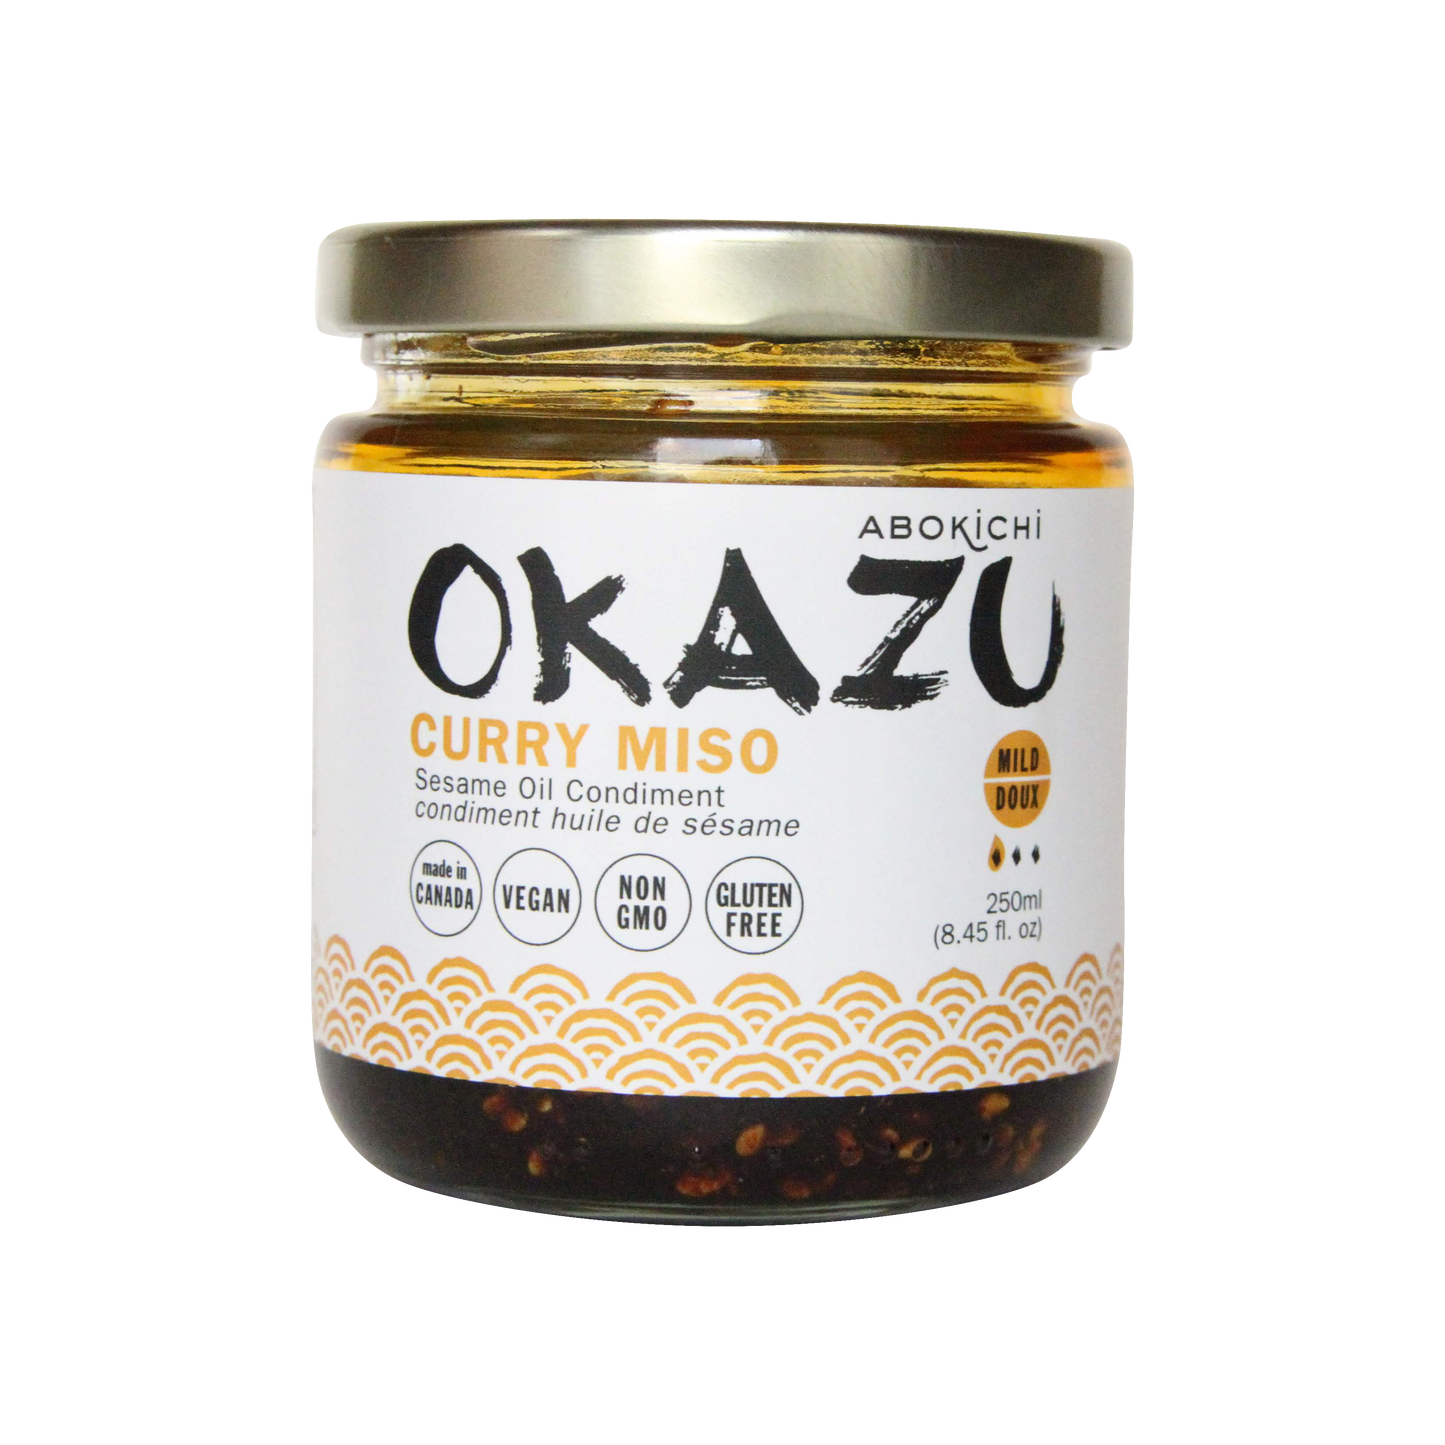 OKAZU - CURRY MISO - Japanese miso curry oil condiment